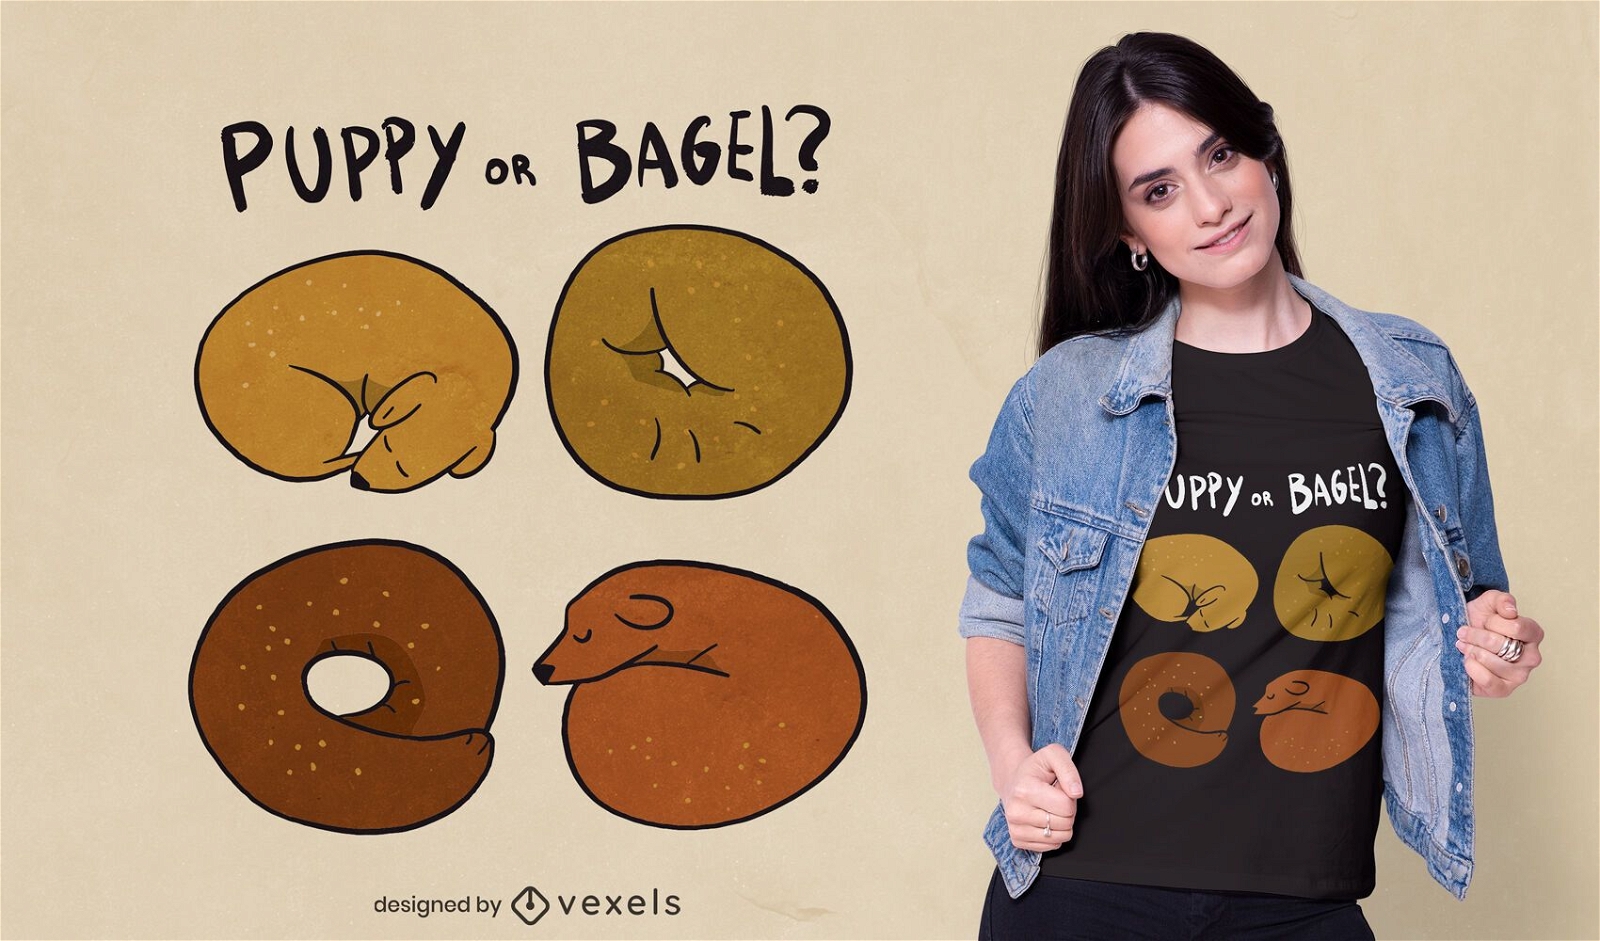 Puppy or bagel t-shirt design